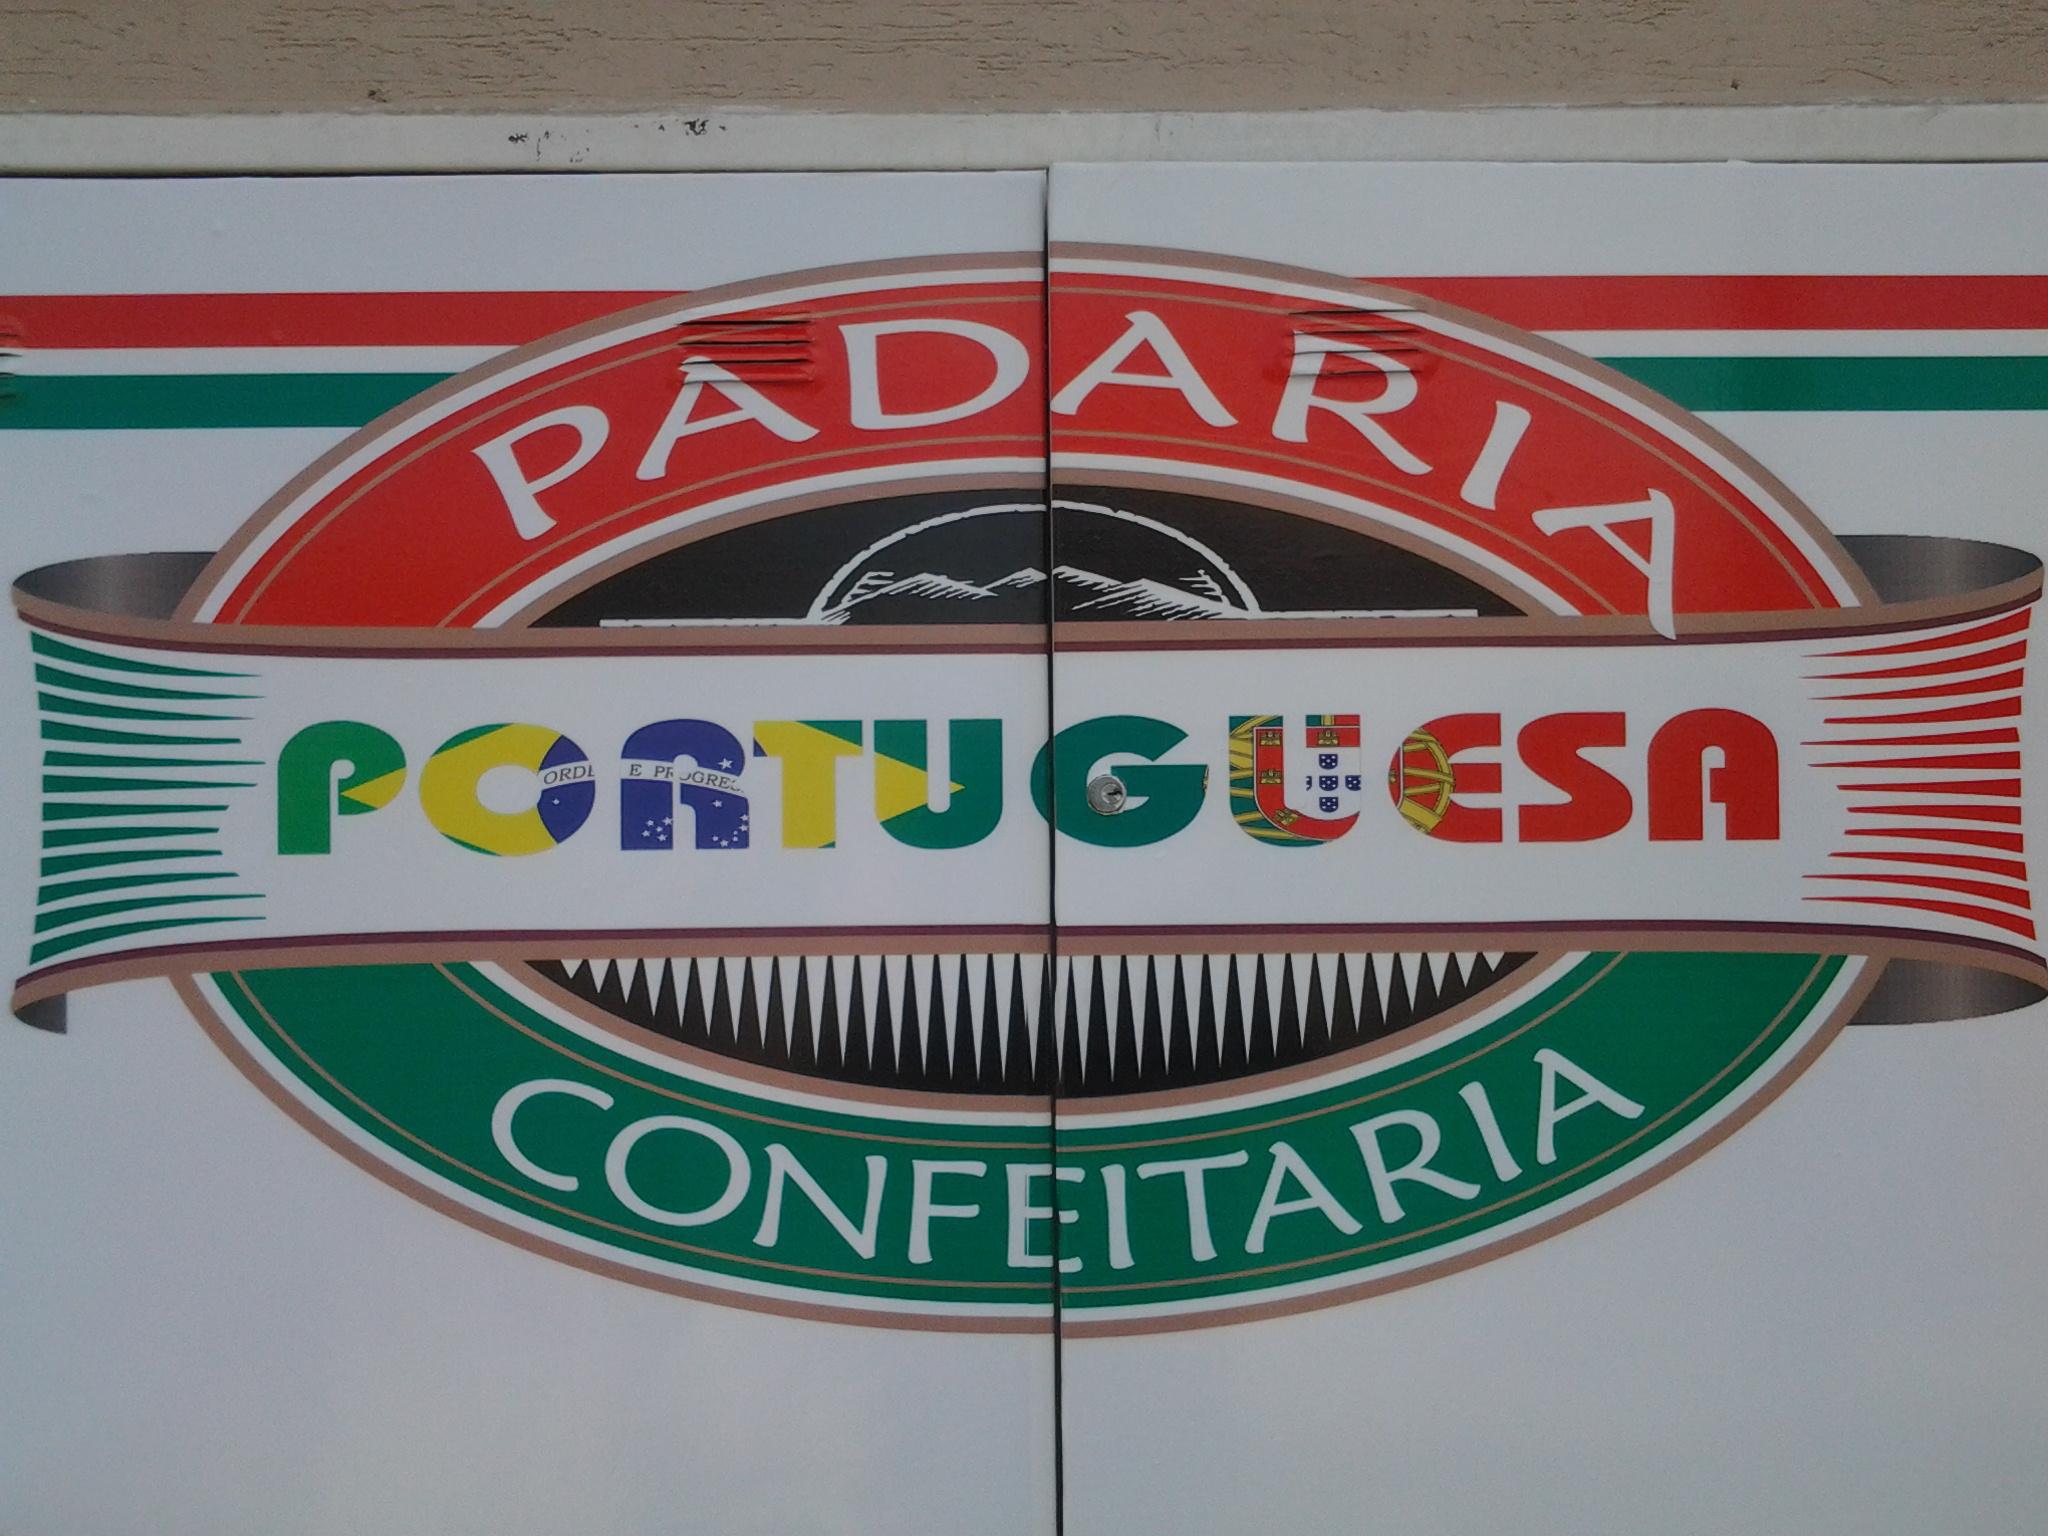 Padaria Portuguesa